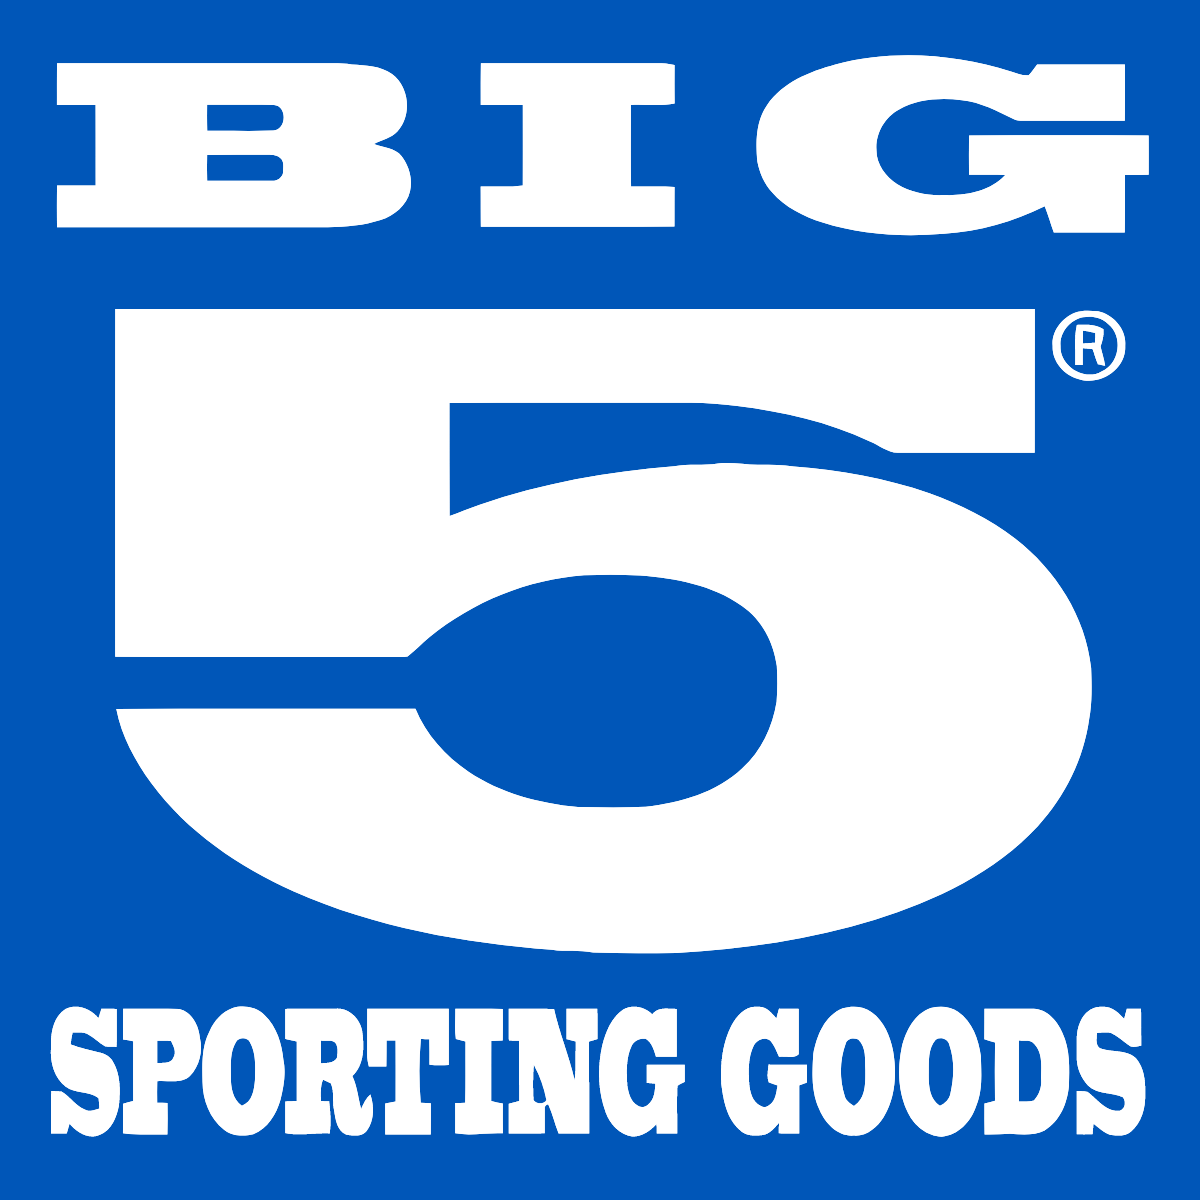 Big 5 Sporting Goods logo (PNG transparent)